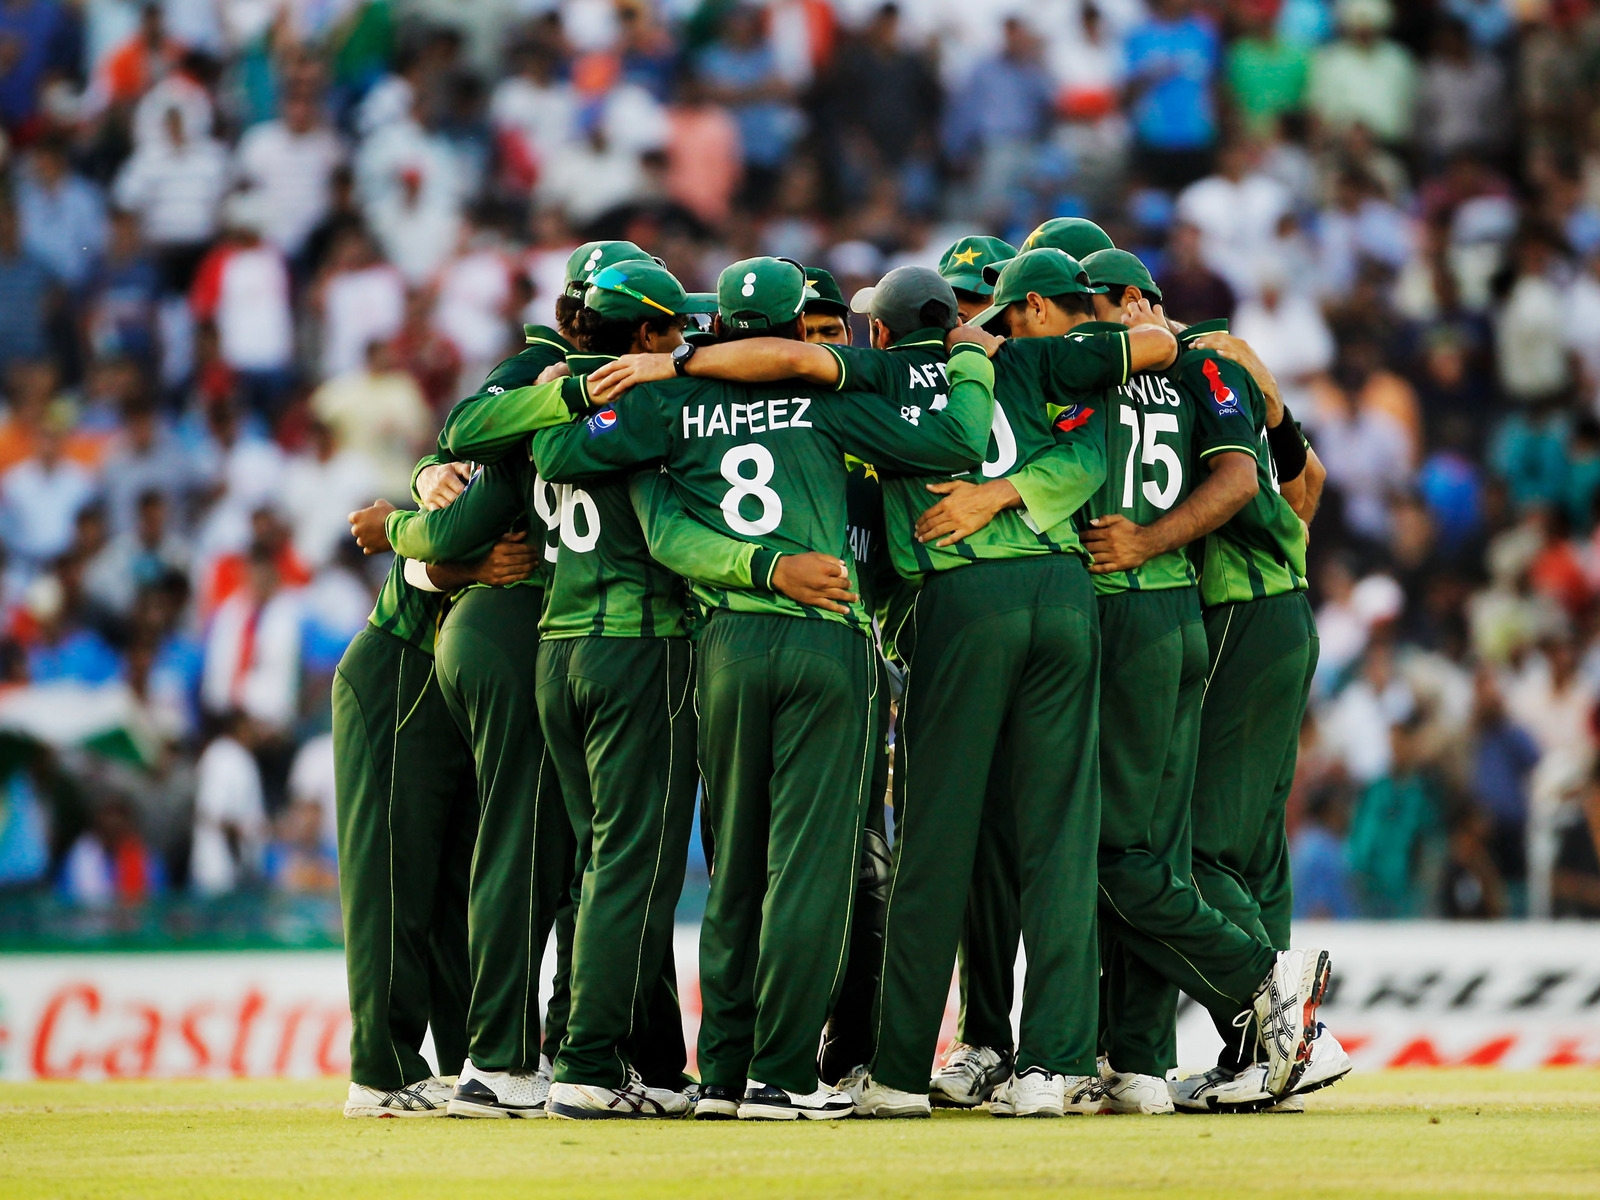 Pakistan Cricket Team for 1600 x 1200 resolution